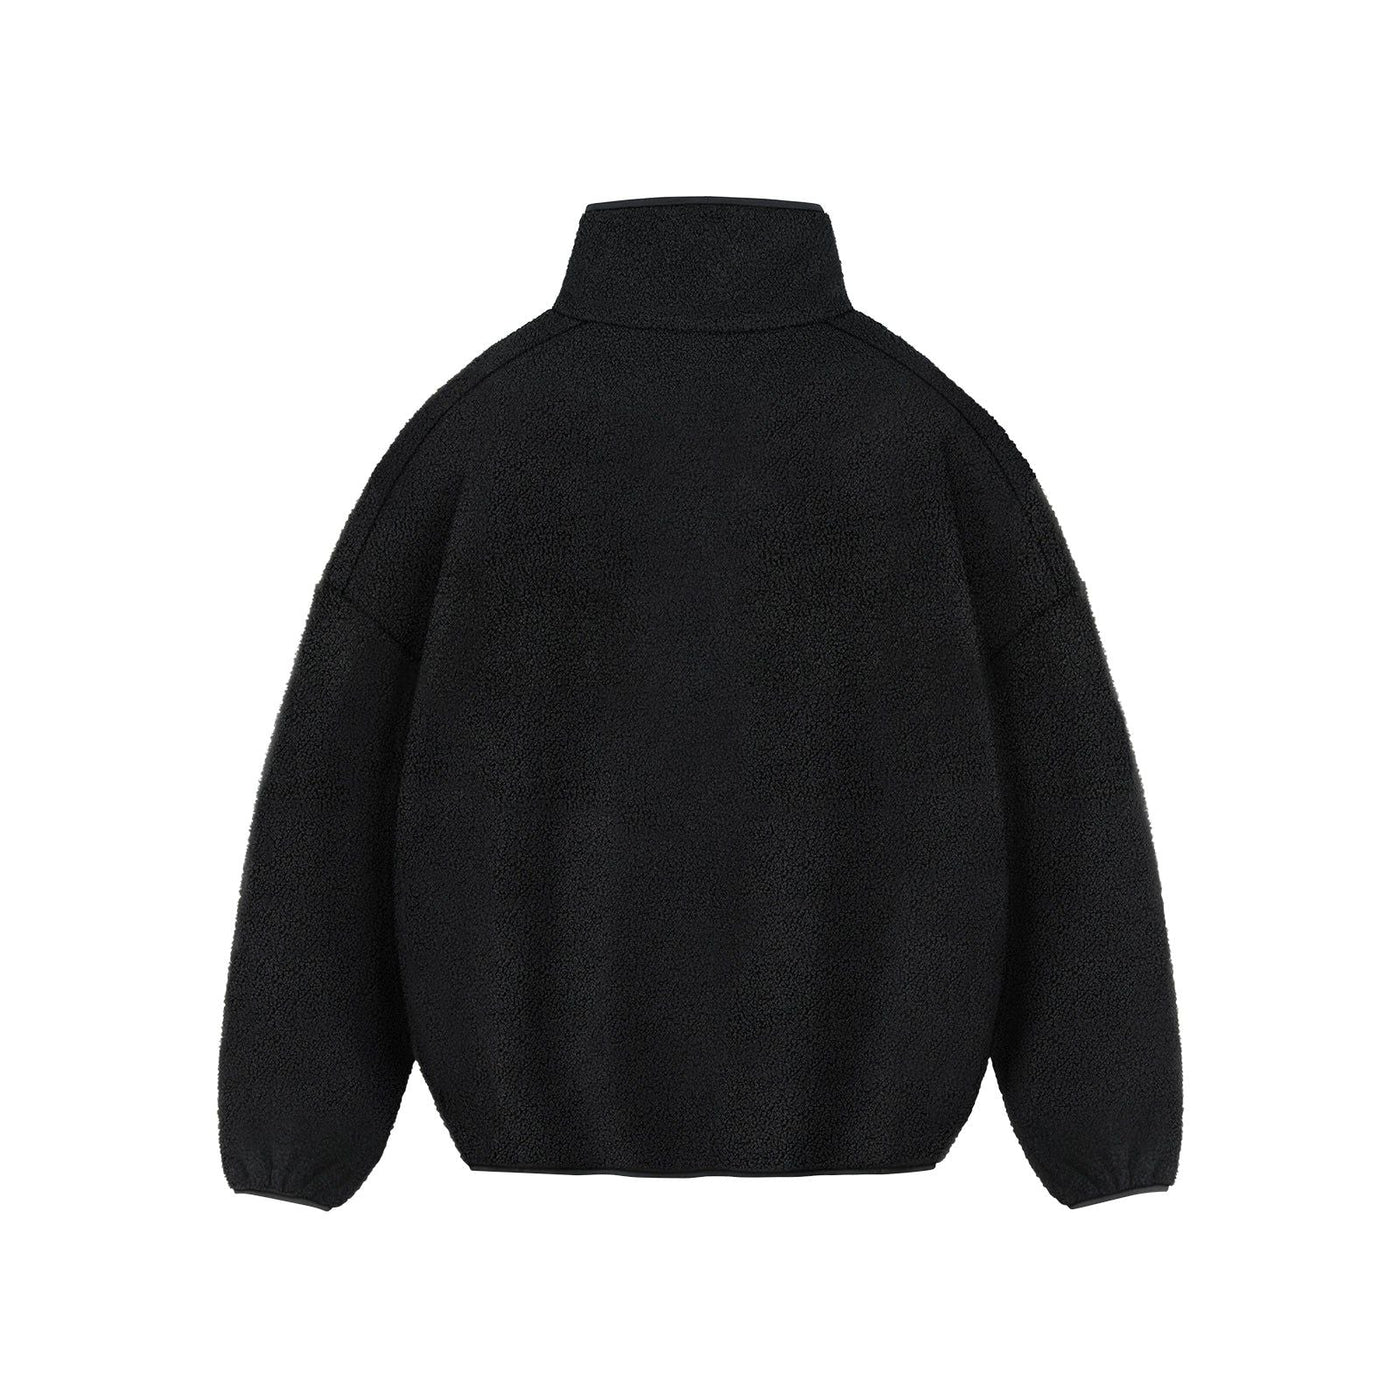 Half-Zipped Sherpa Jacket Korean Street Fashion Jacket By IDLT Shop Online at OH Vault